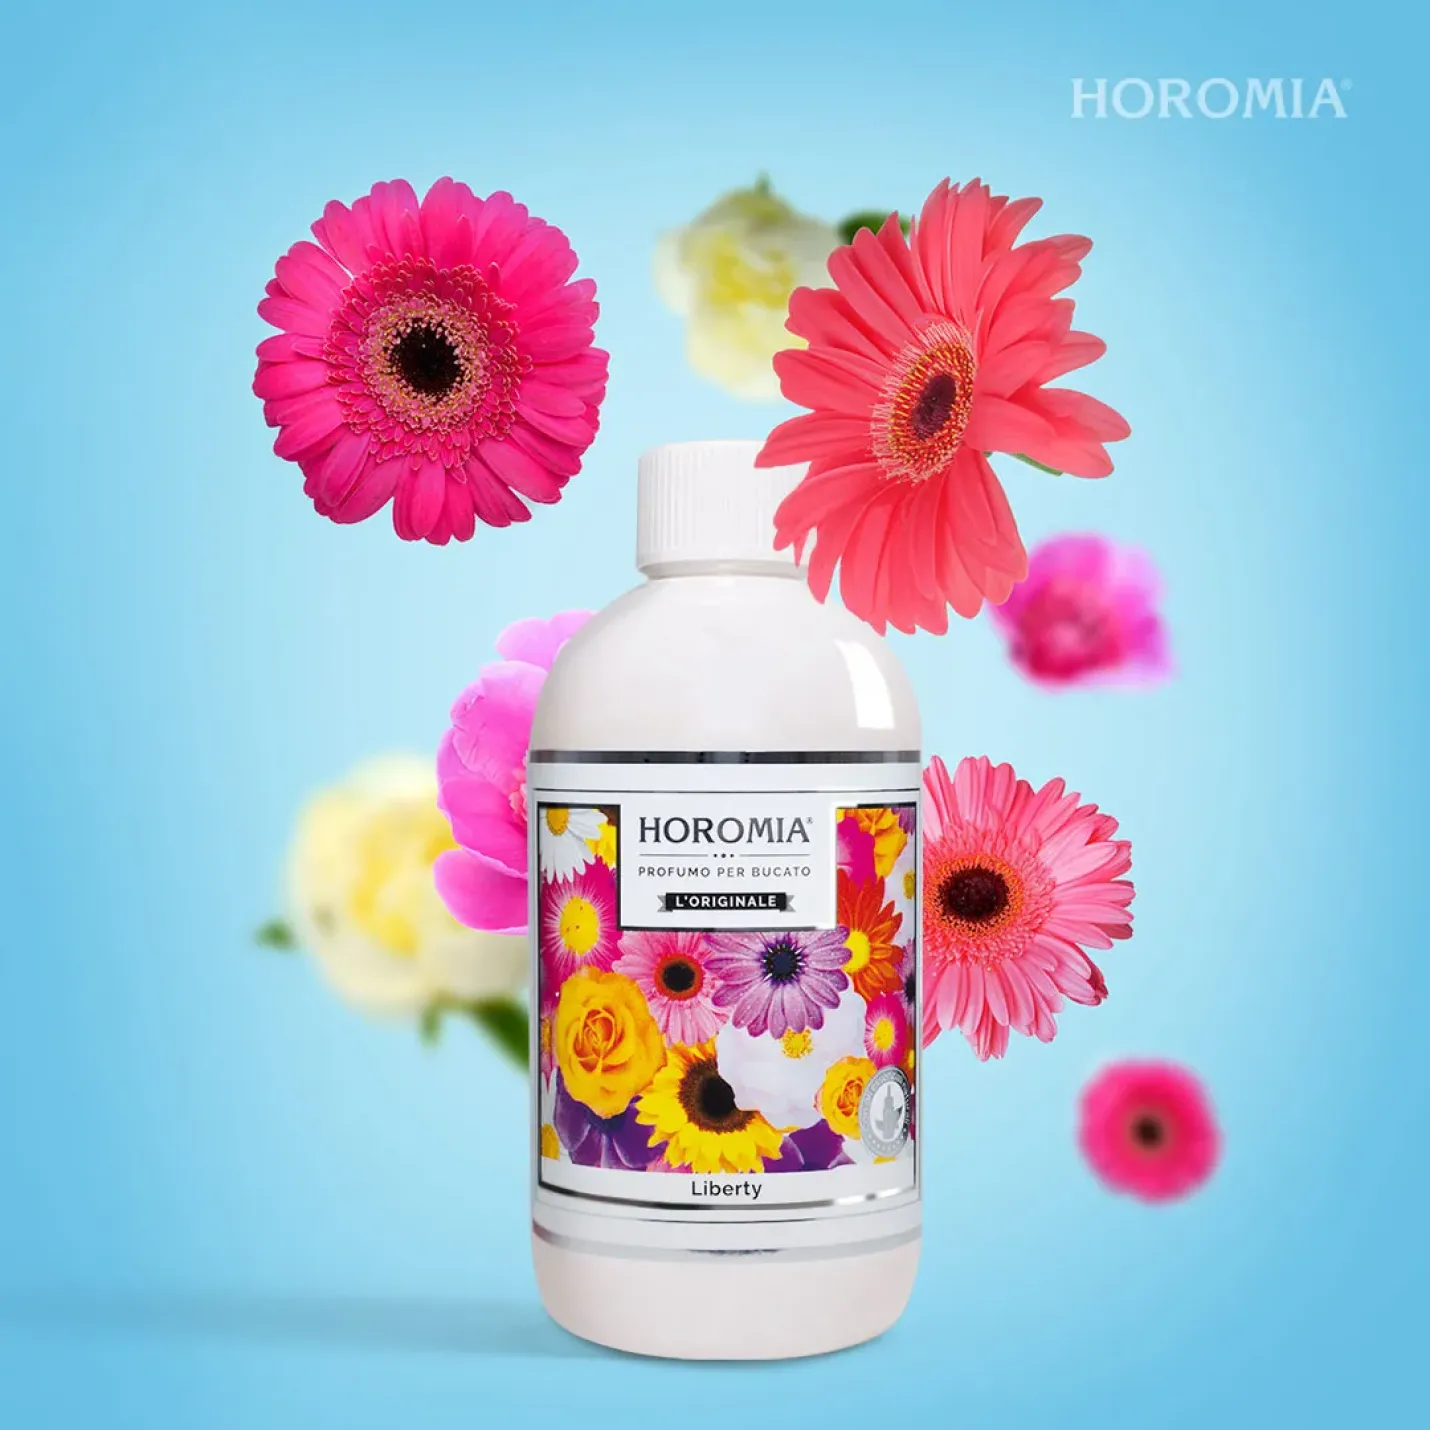 Horomia Wasparfum Liberty Limited Edition - 500ml; Afbeelding: 2